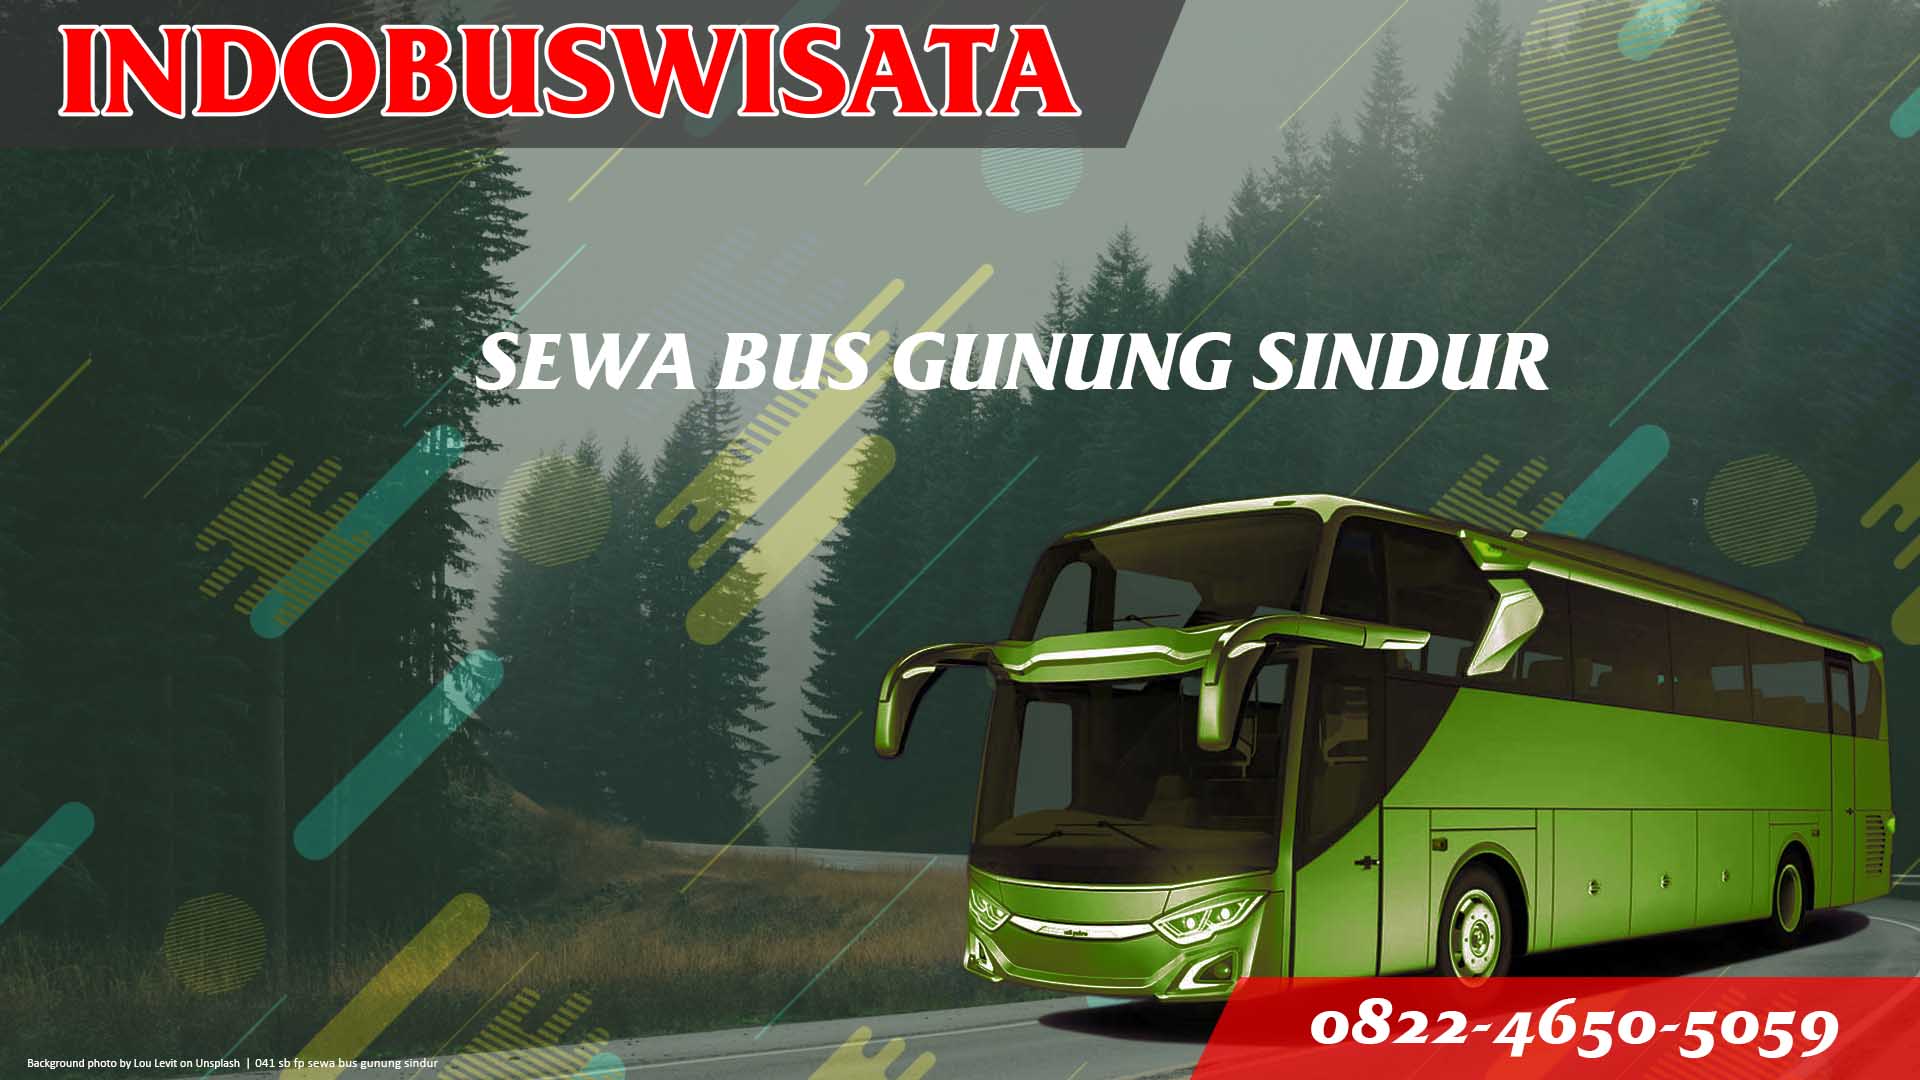 041 Sb Fp Sewa Bus Gunung Sindur Jb 3 Hdd Indobuswisata